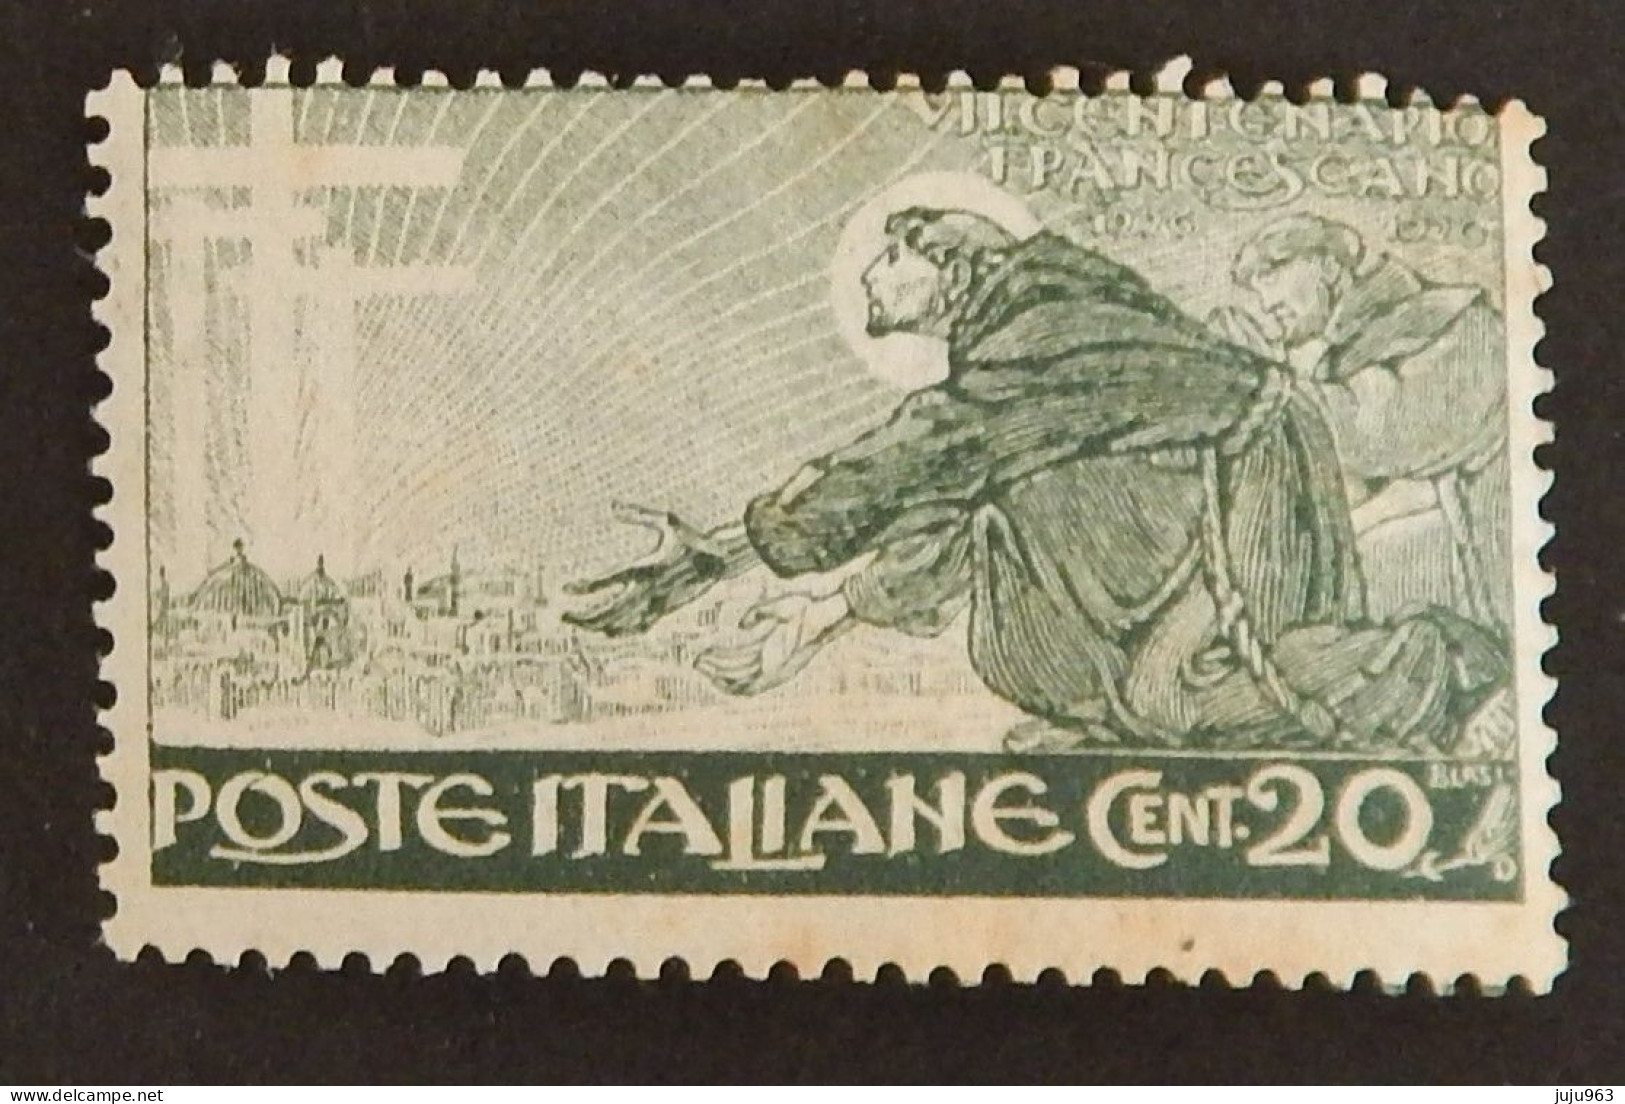 ITALIE YT 186 NEUF**MNH ANNEE 1926 AVEC DES ROUSSEURS - Mint/hinged